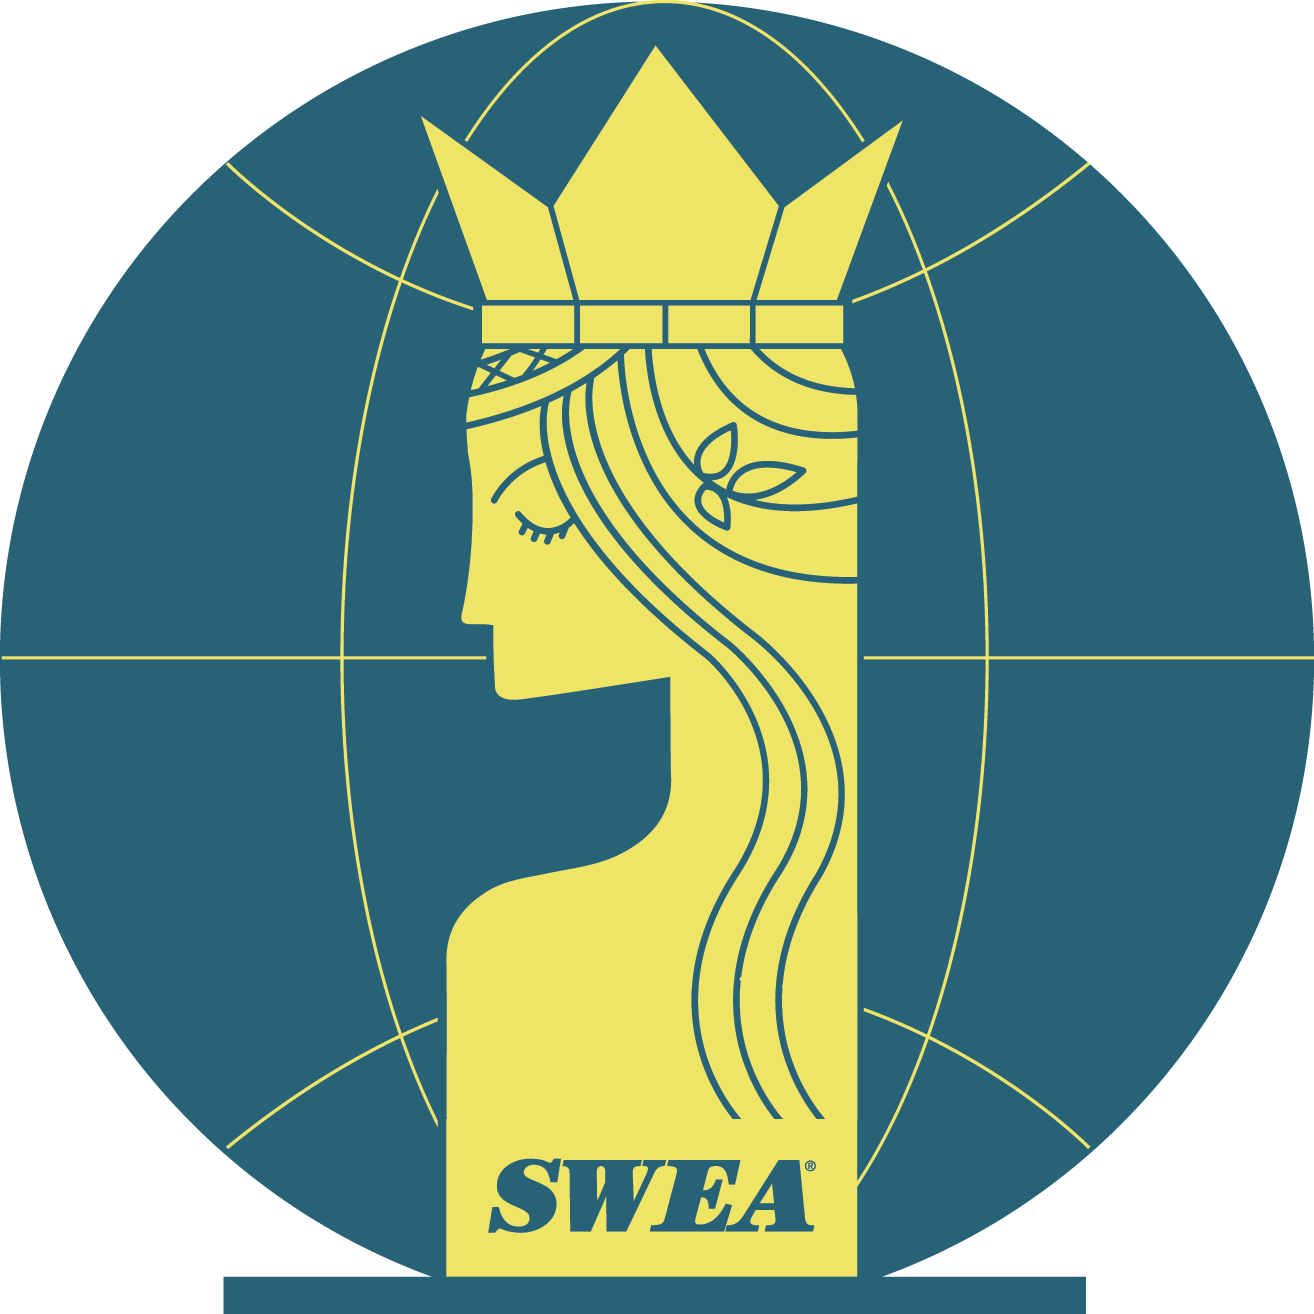 Swedish Association Near Me - Swedish Women’s Educational Association Florida